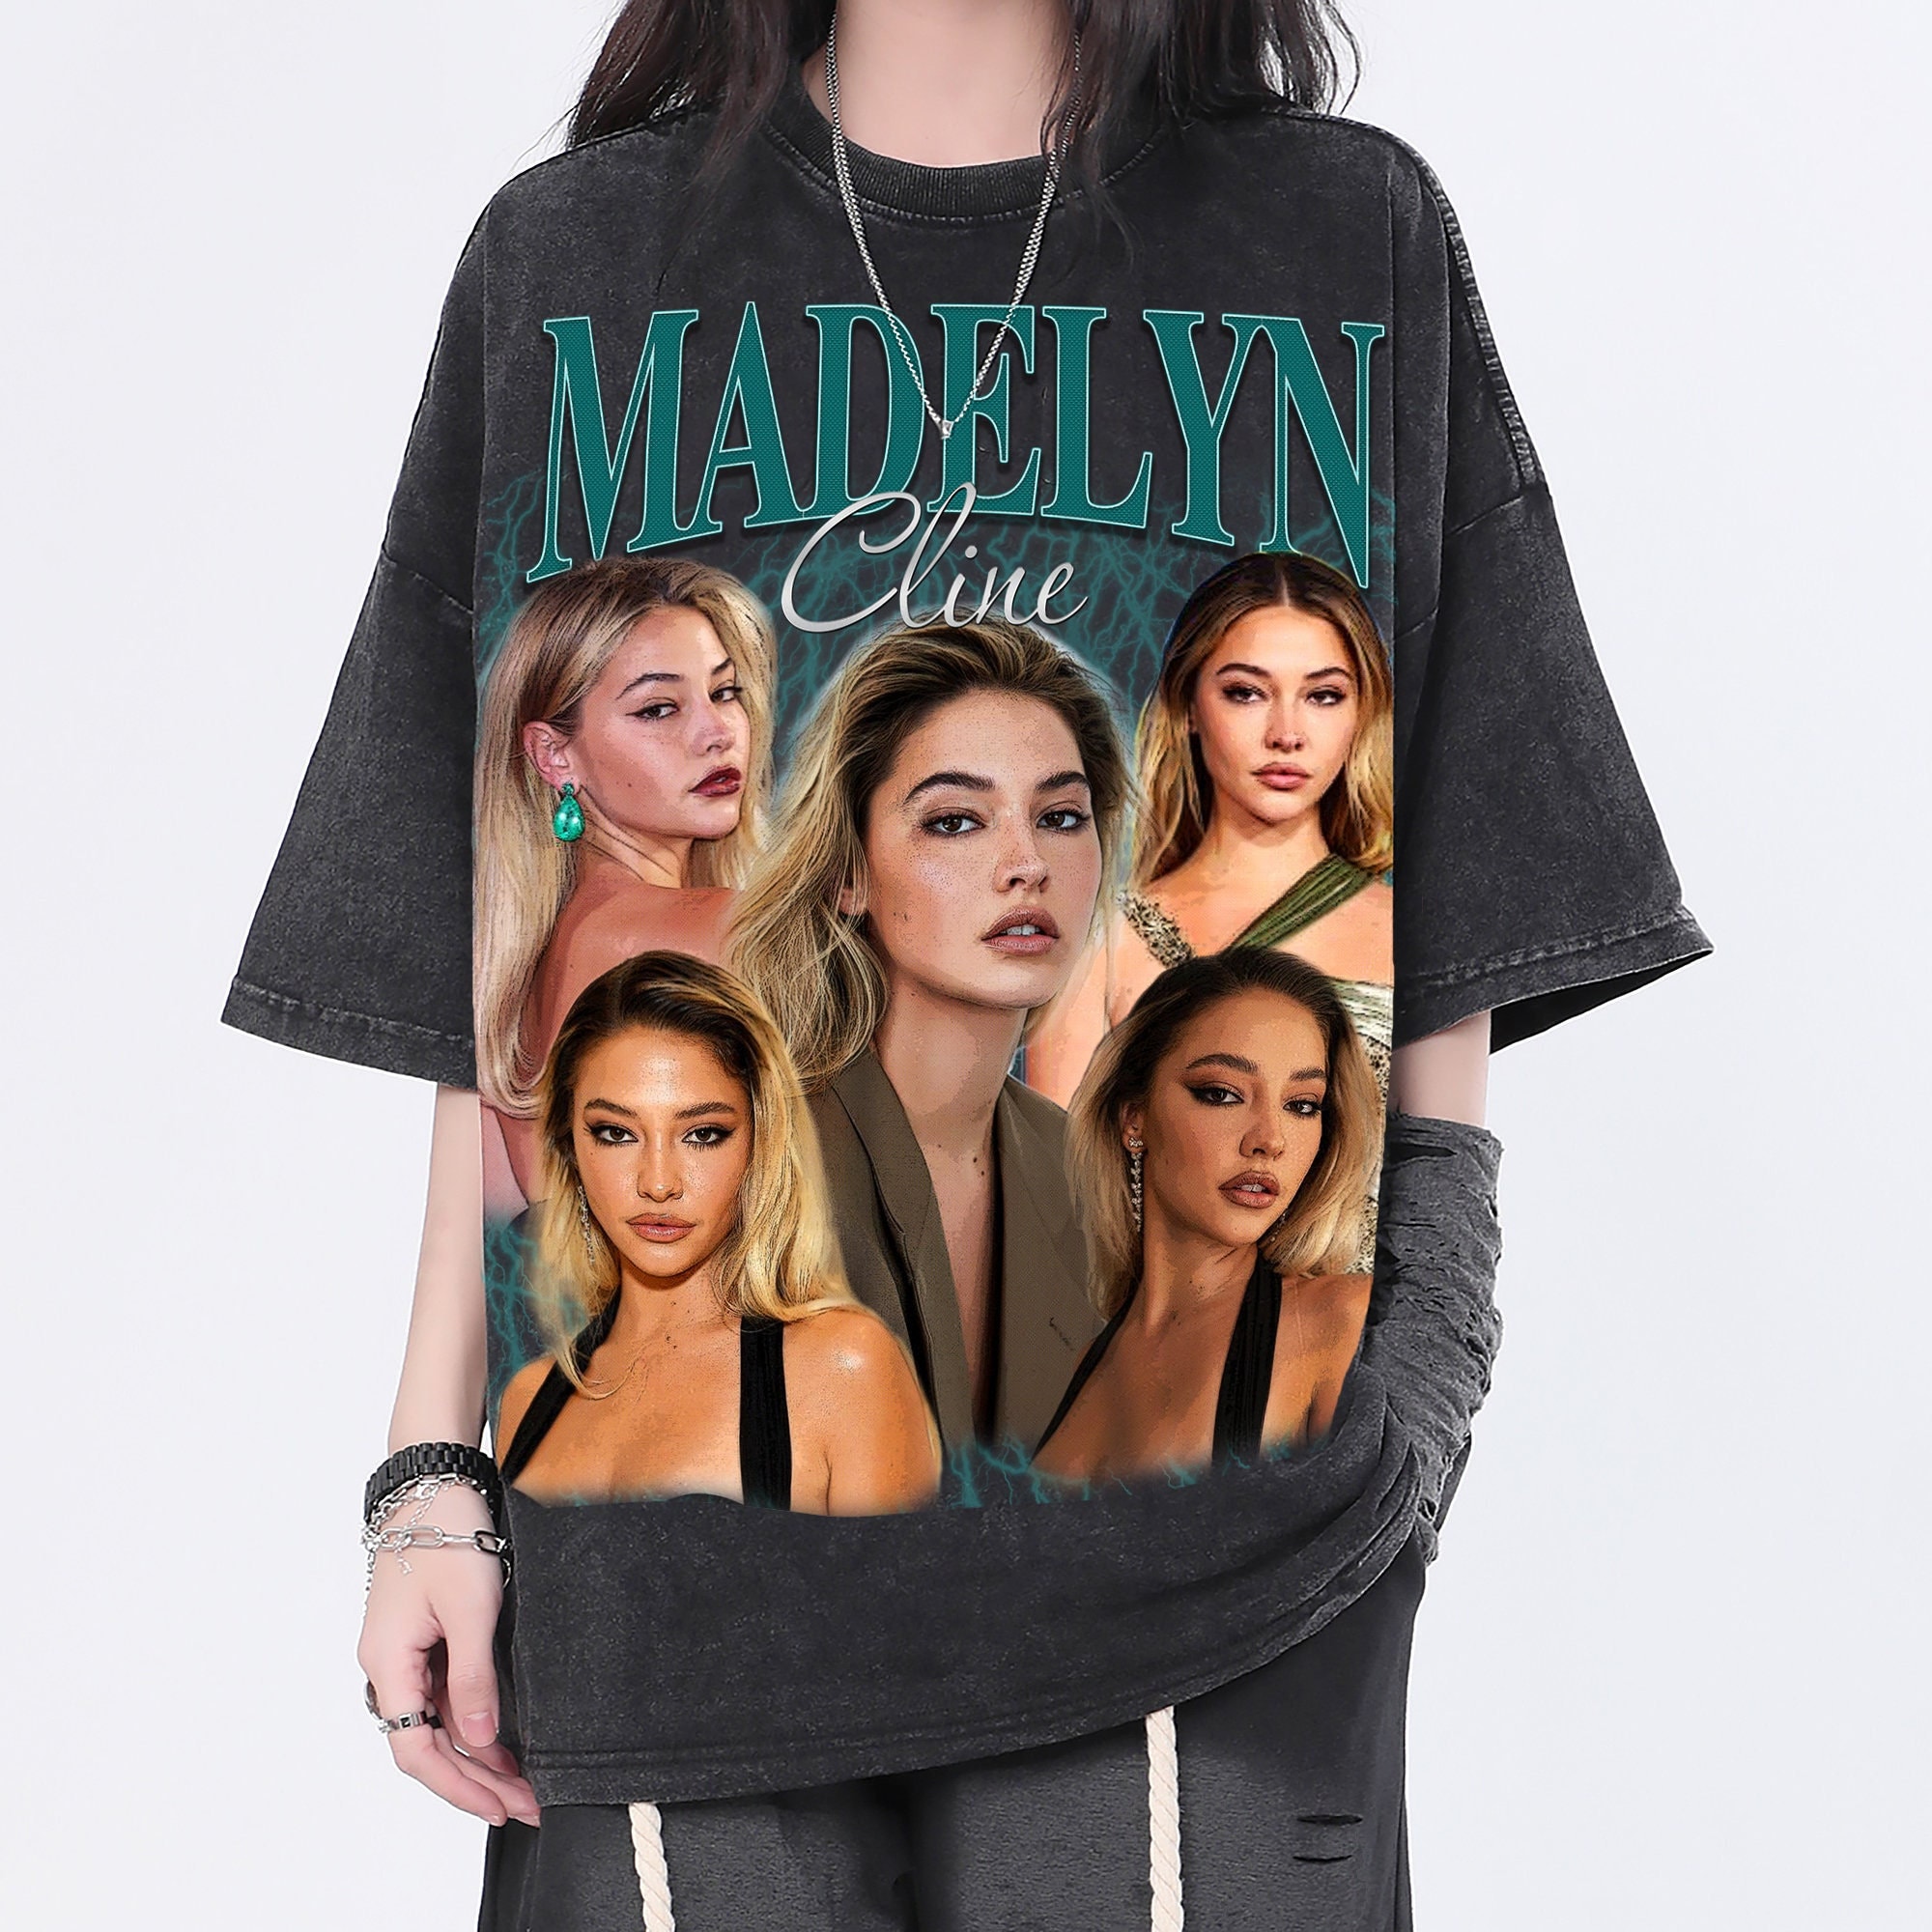 Madelyn Shirt 